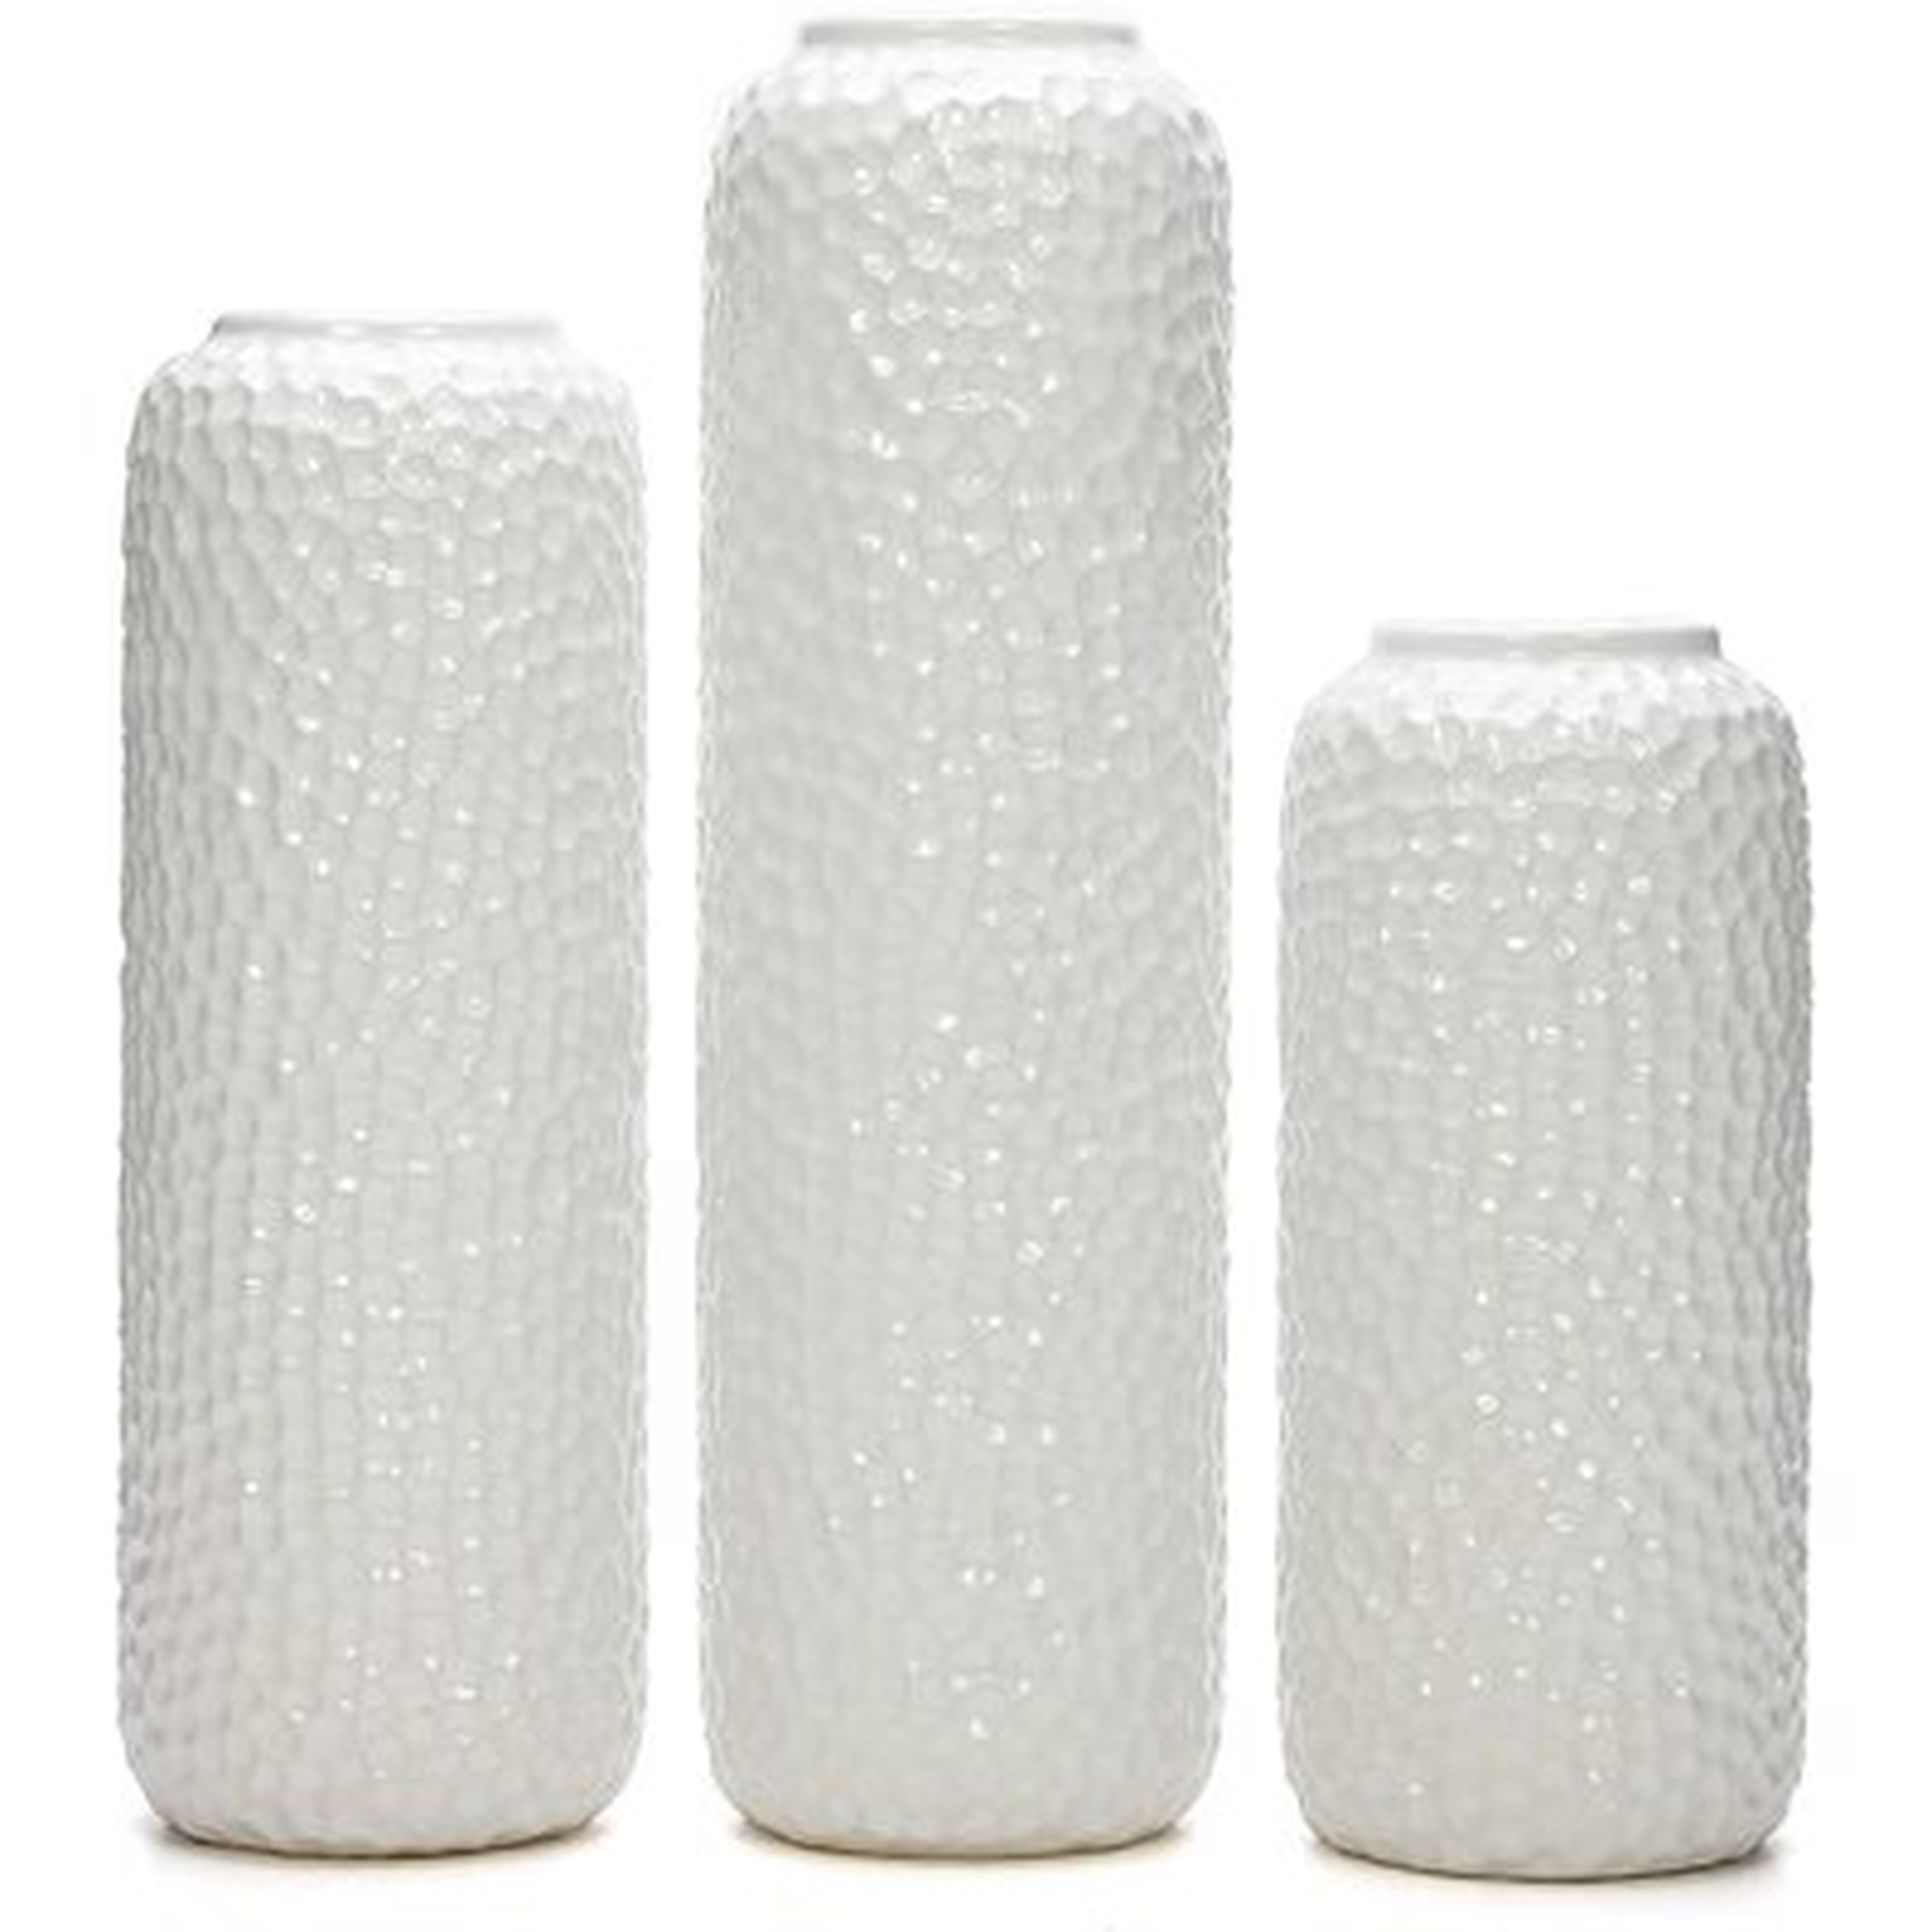 White Ceramic Honeycomb Vase, Set of 3 - Wayfair